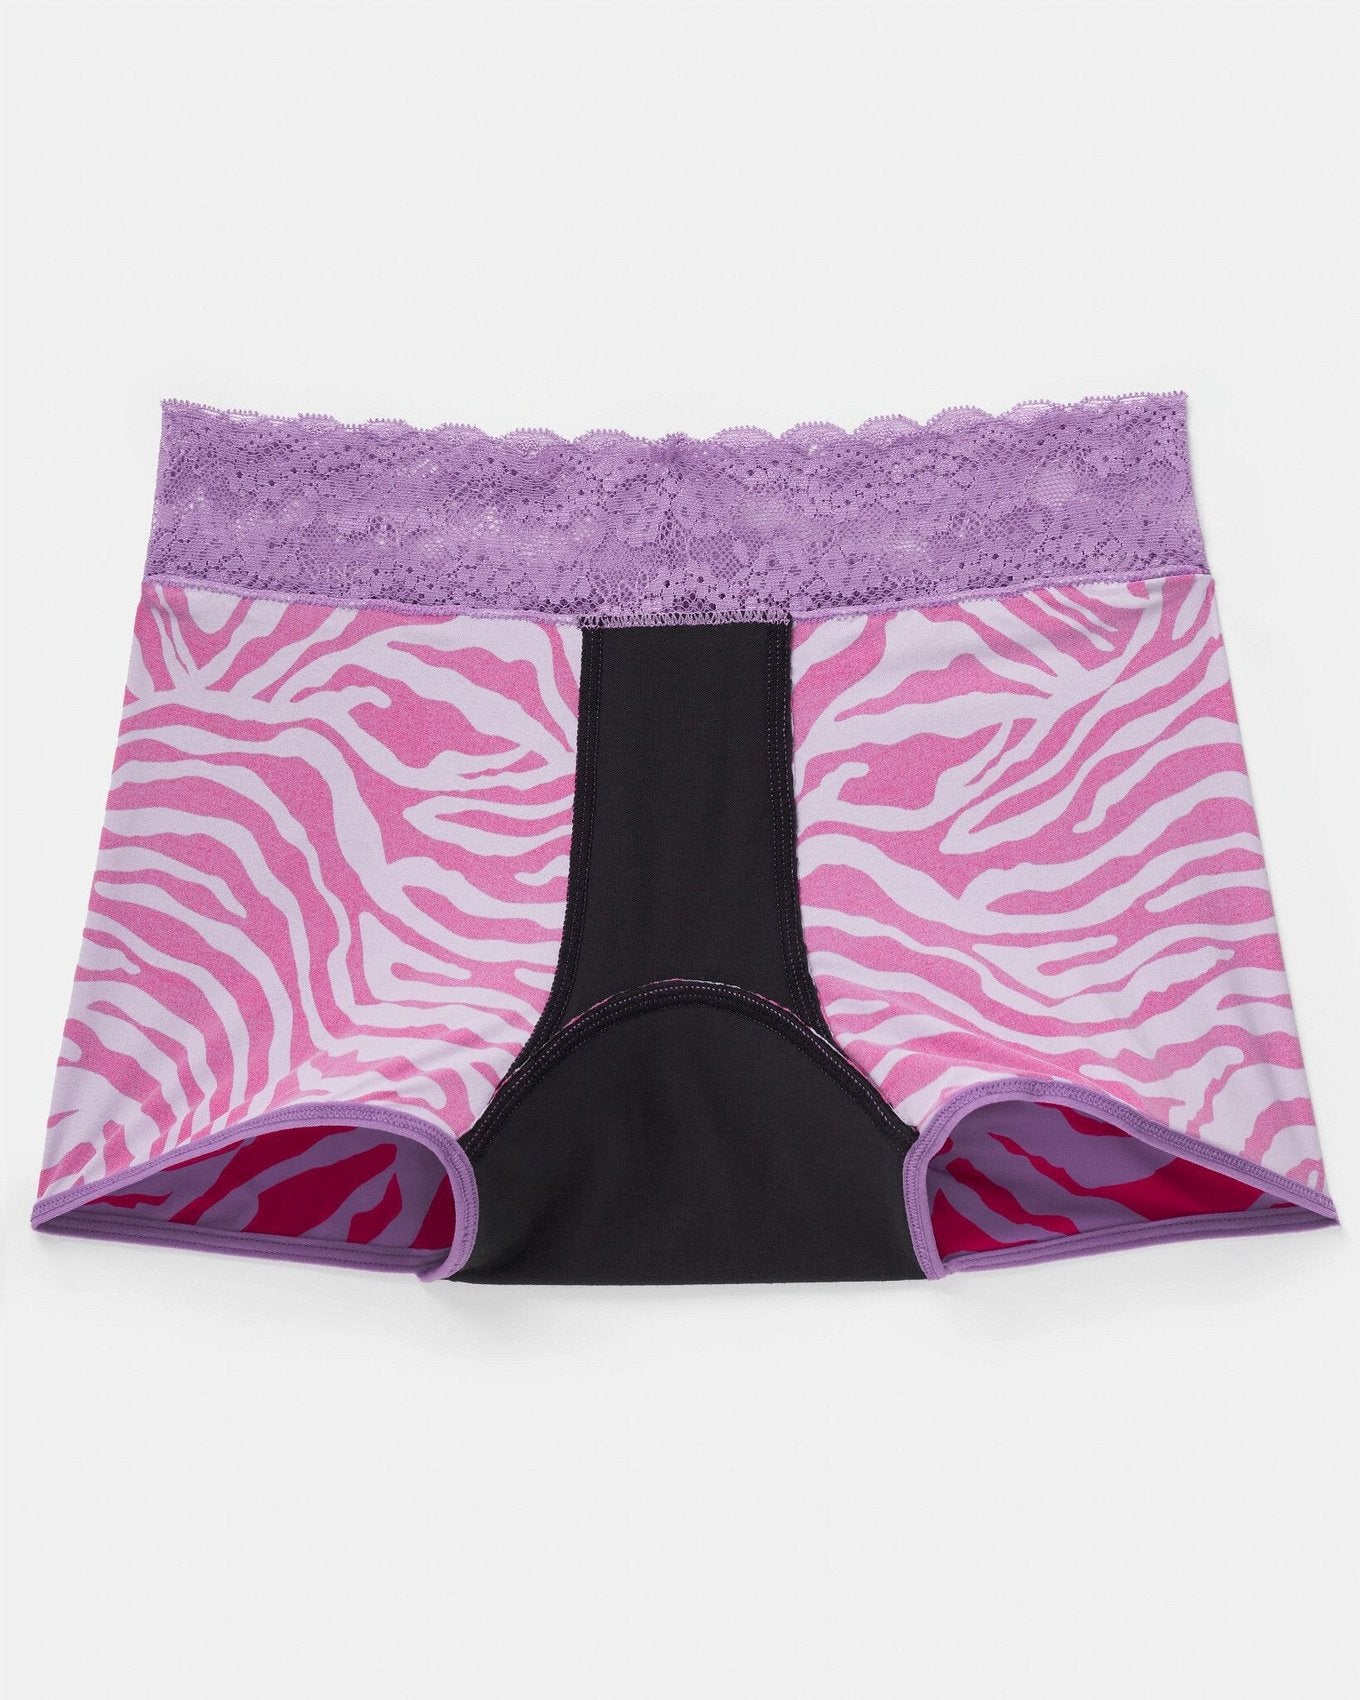 Joyja Emily period-proof panty in color Secret Safari C02 and shape shortie